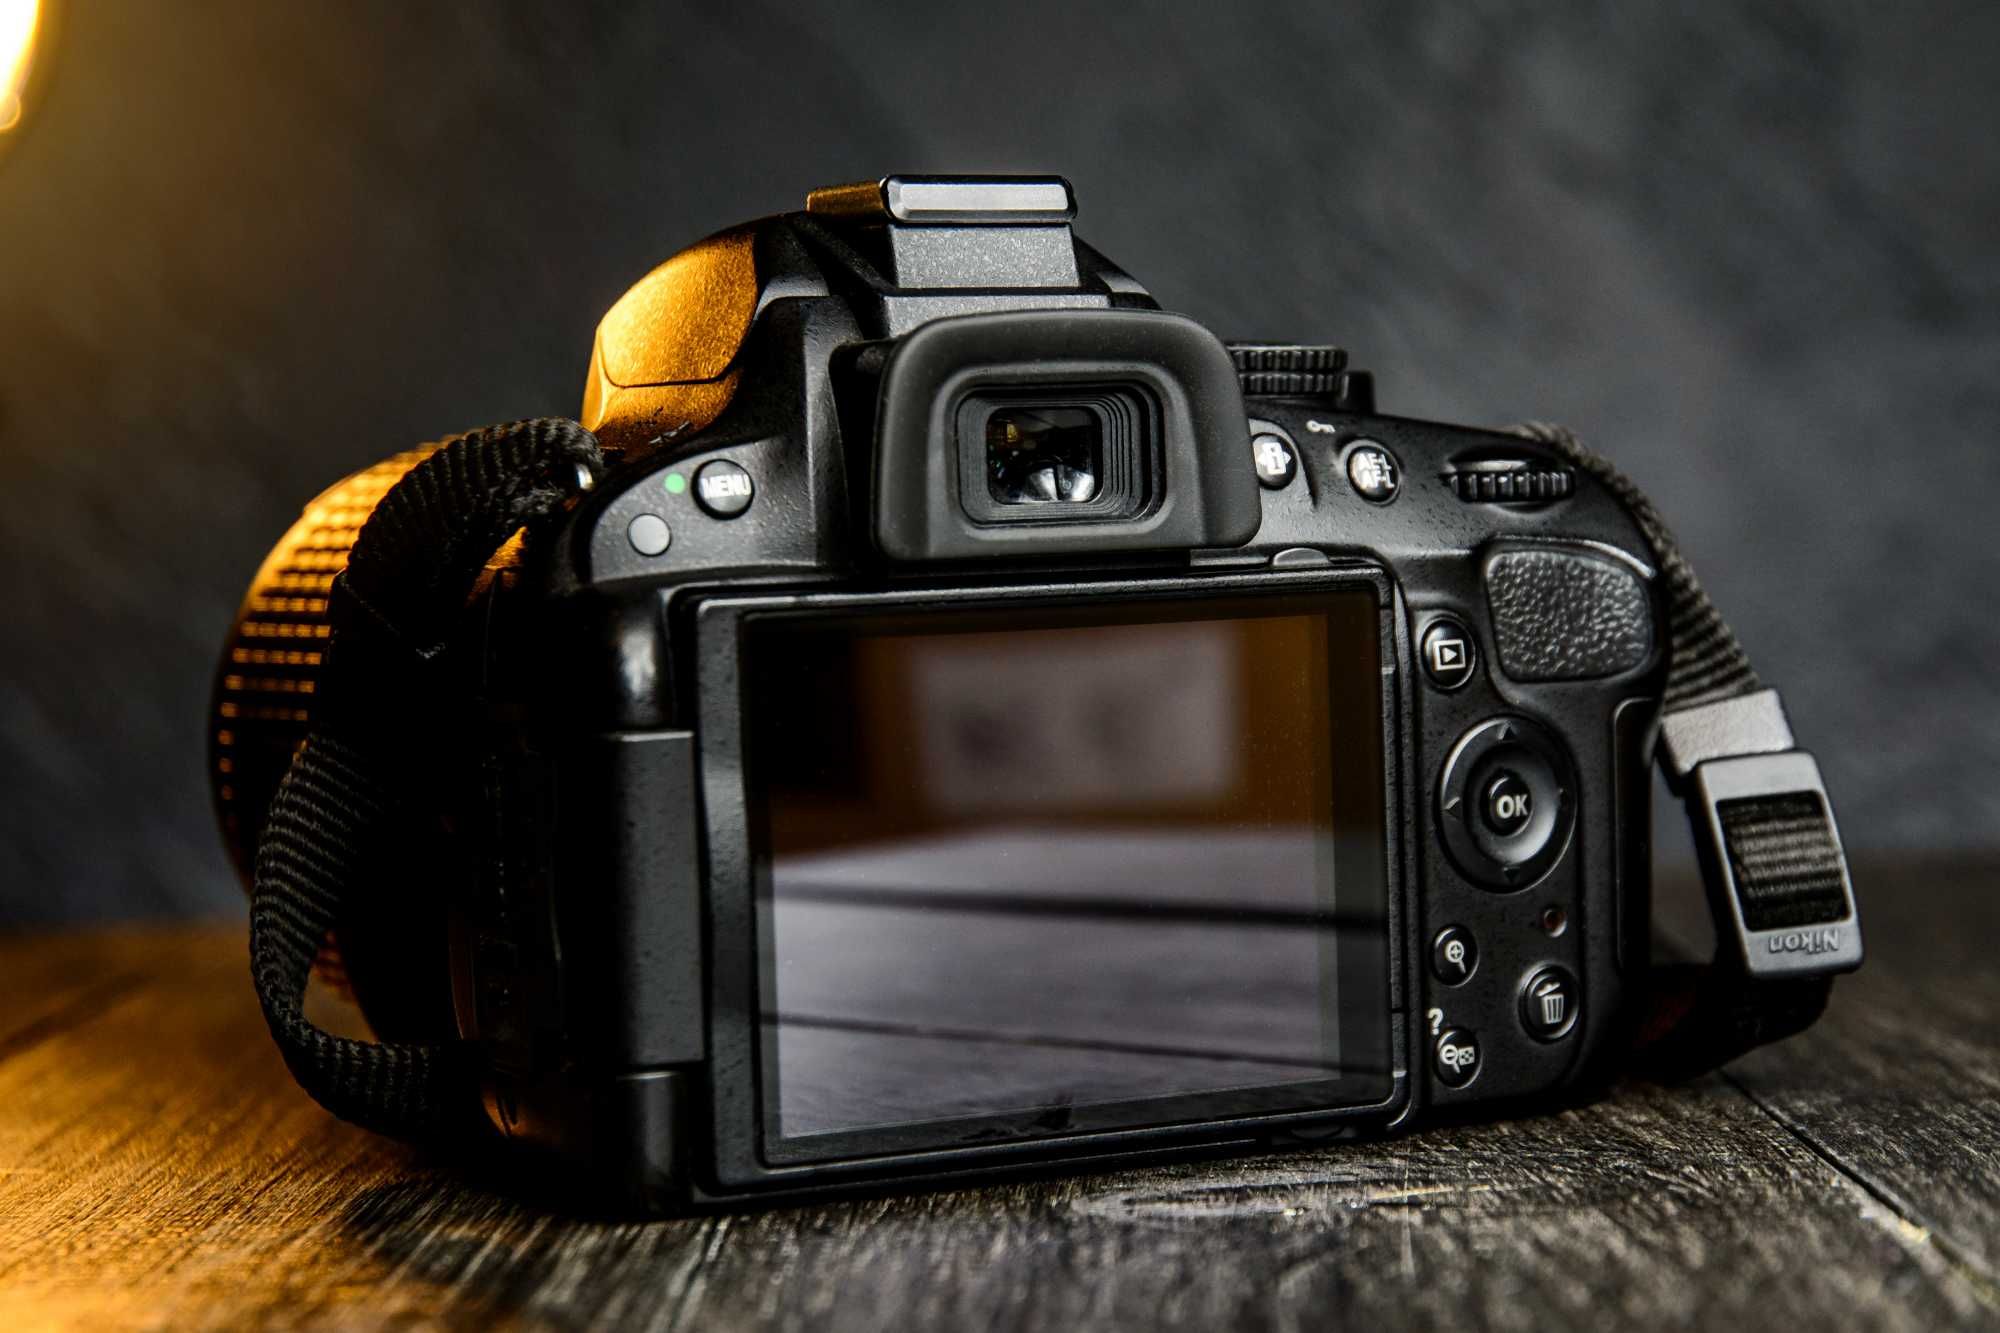 Nikon D5100 + 18-105 f/3.5-5.6G VR